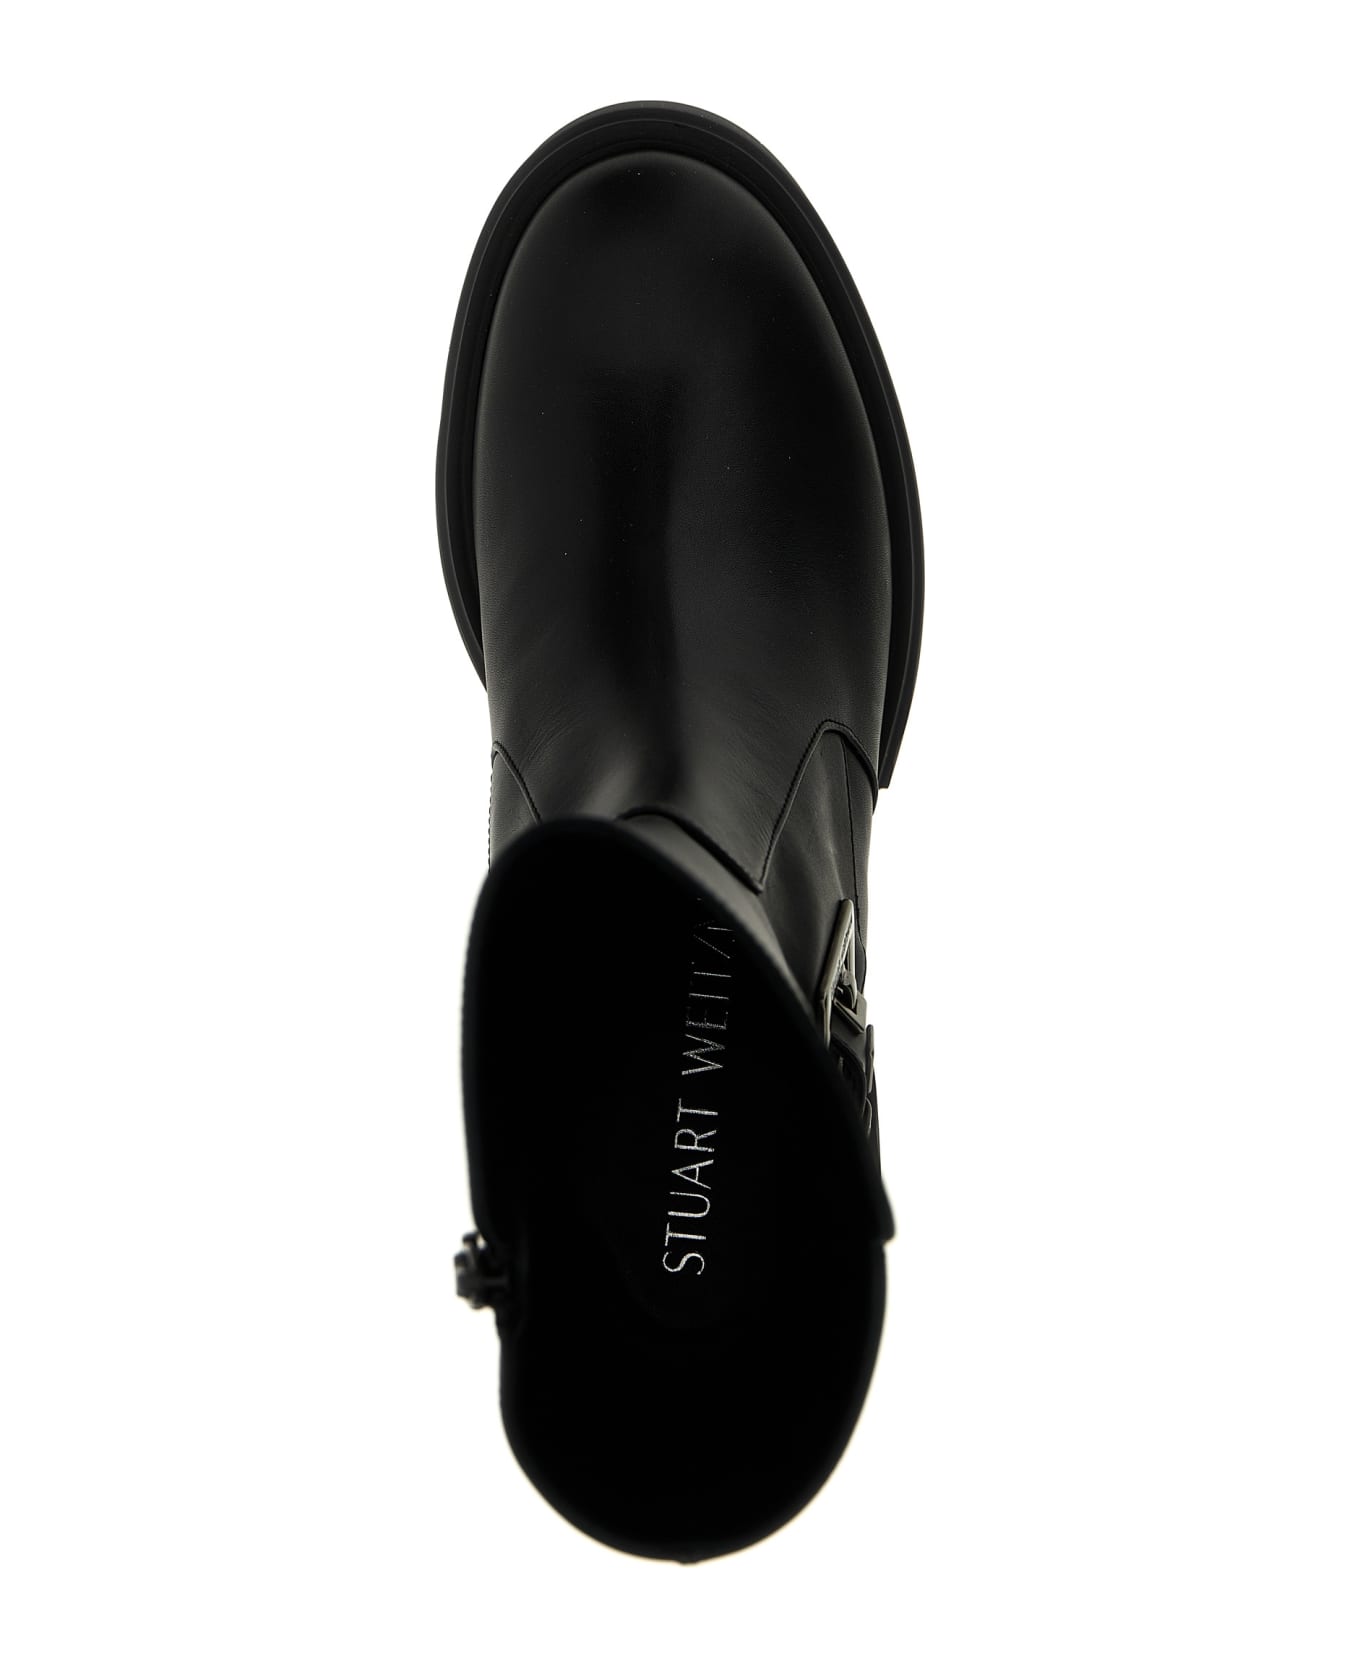 Stuart Weitzman 'soho' Boots - Black   ブーツ